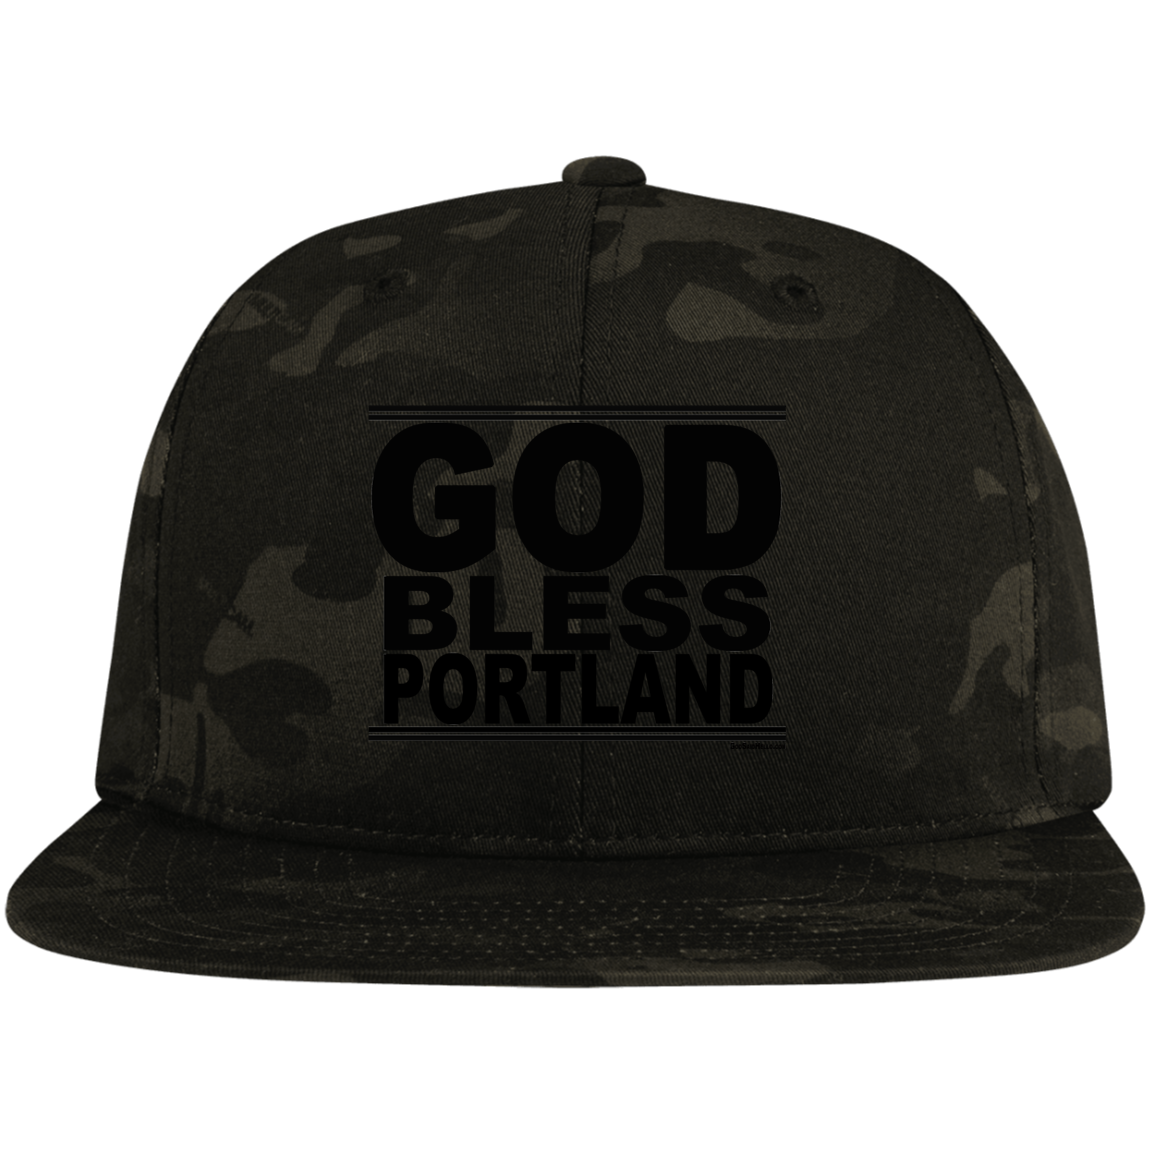 #GodBlessPortland - Snapback Hat